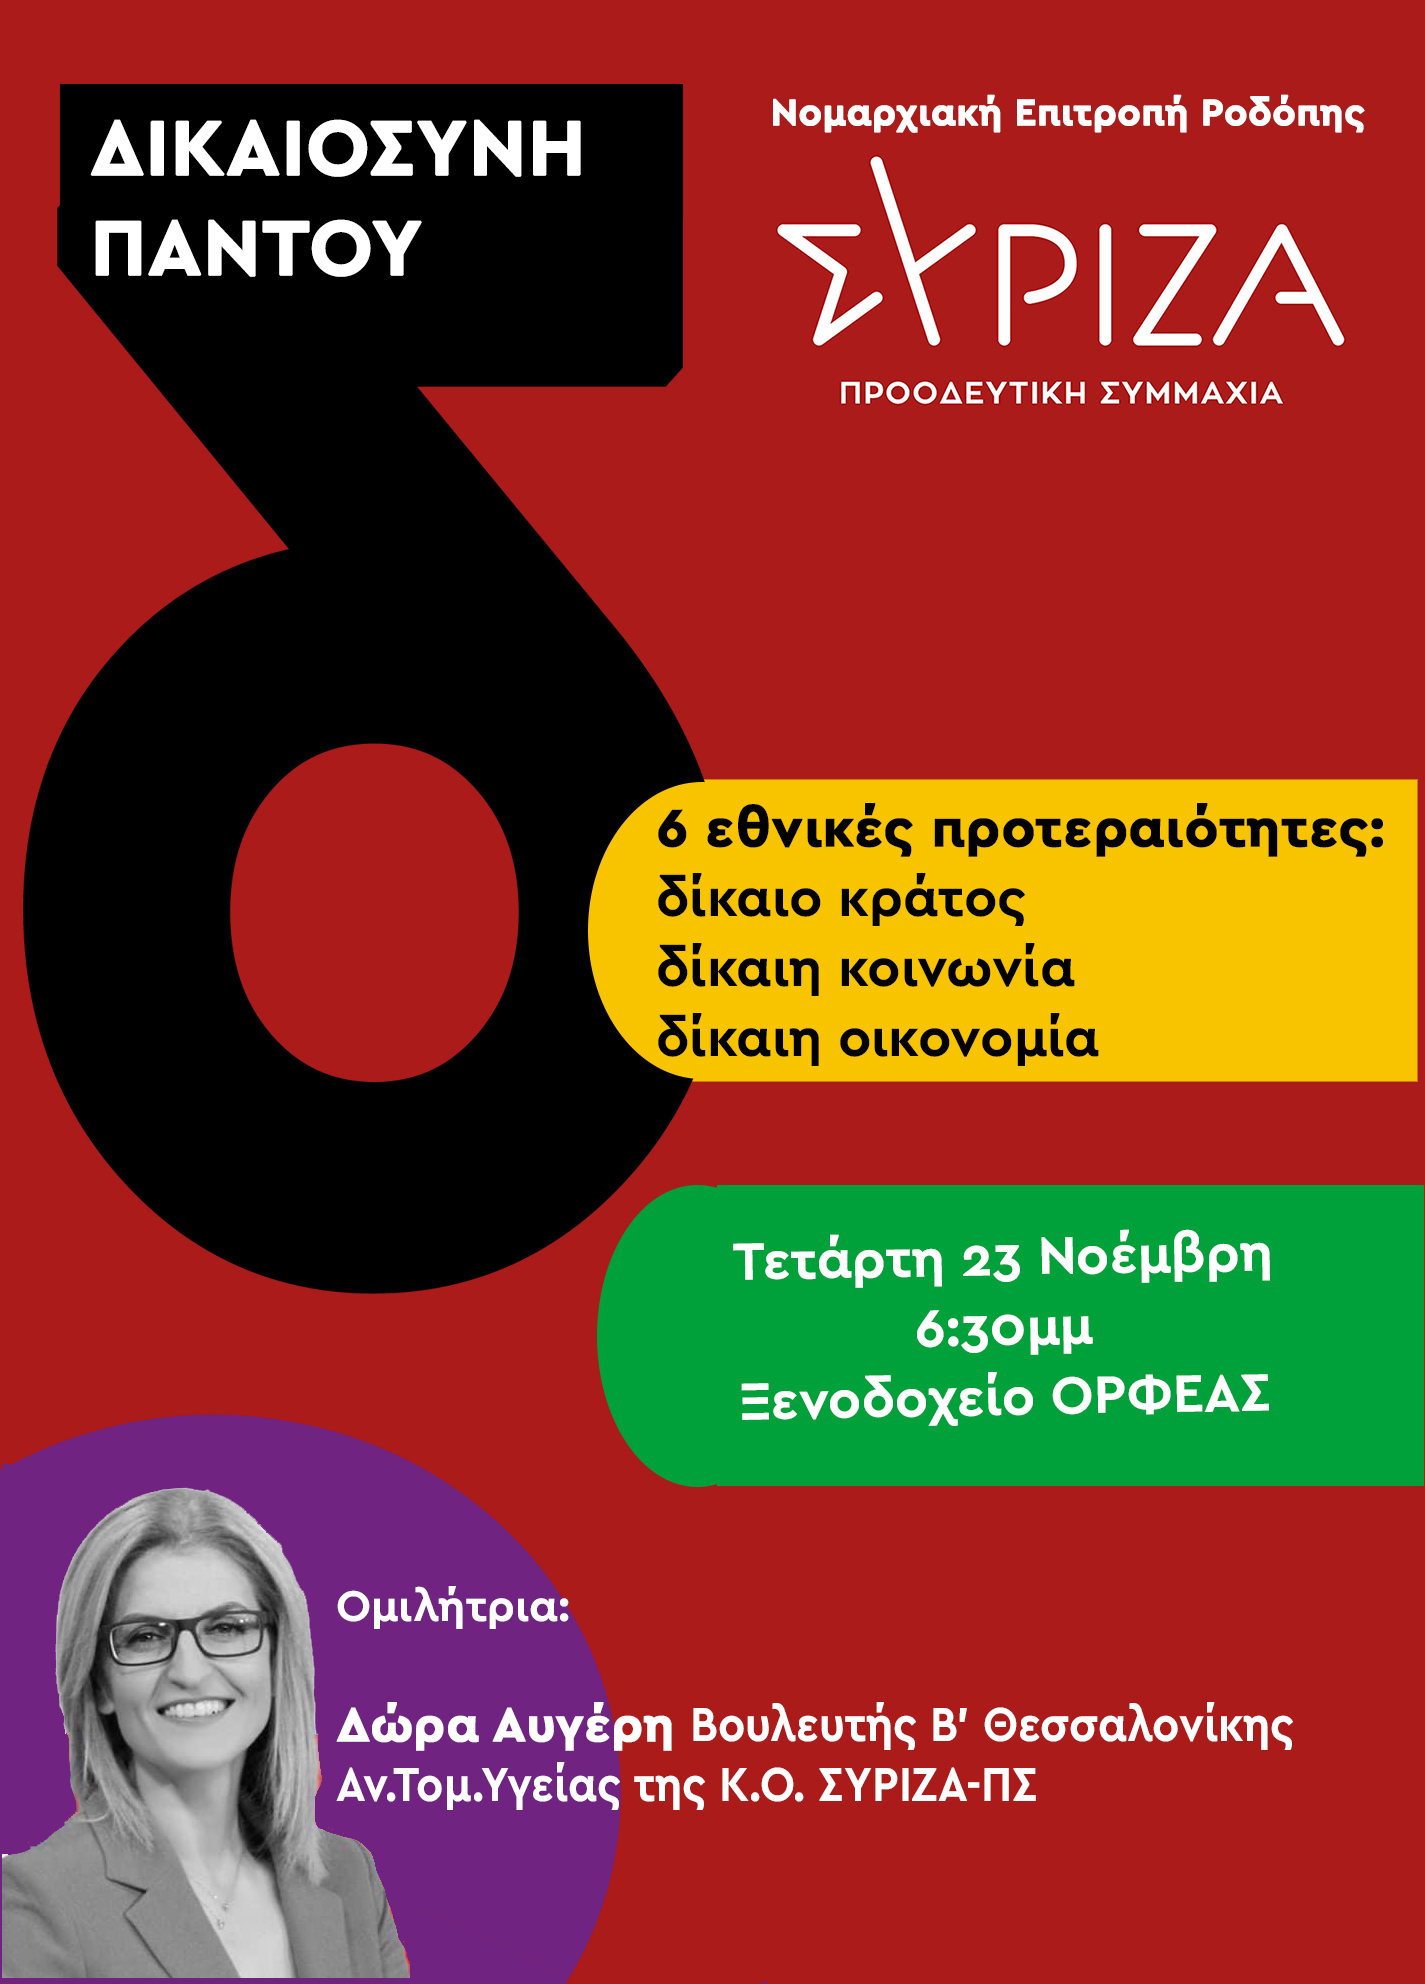 Tο πρόγραμμα της επίσκεψης της Δώρας Αυγέρη, Βουλευτή Β’ Θεσσαλονίκης στην Κομοτηνή